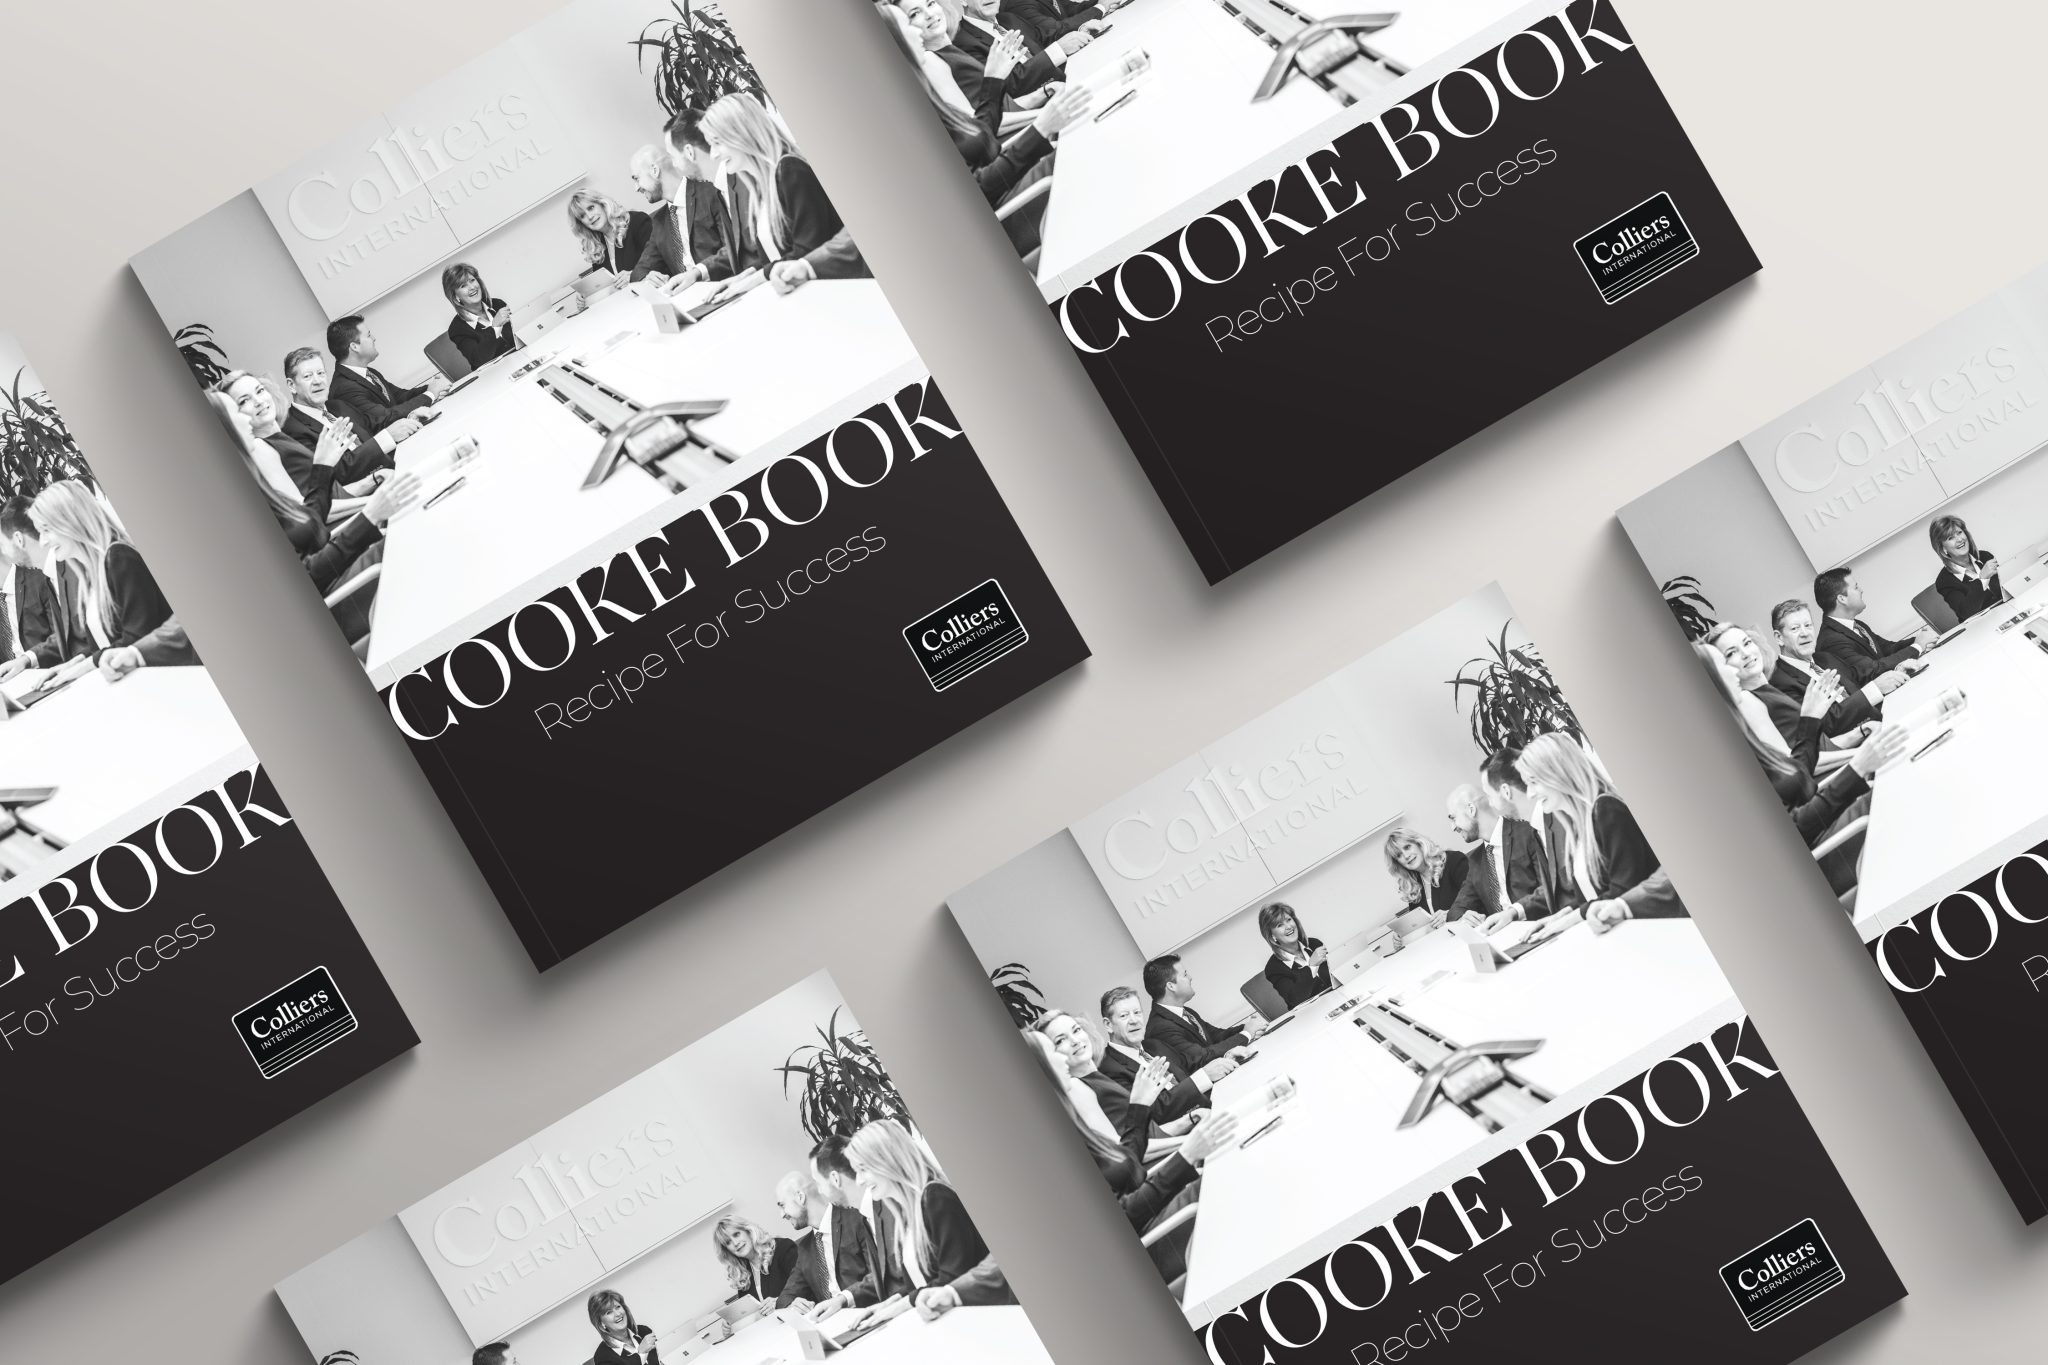 Cooke Book - Recipe for Success